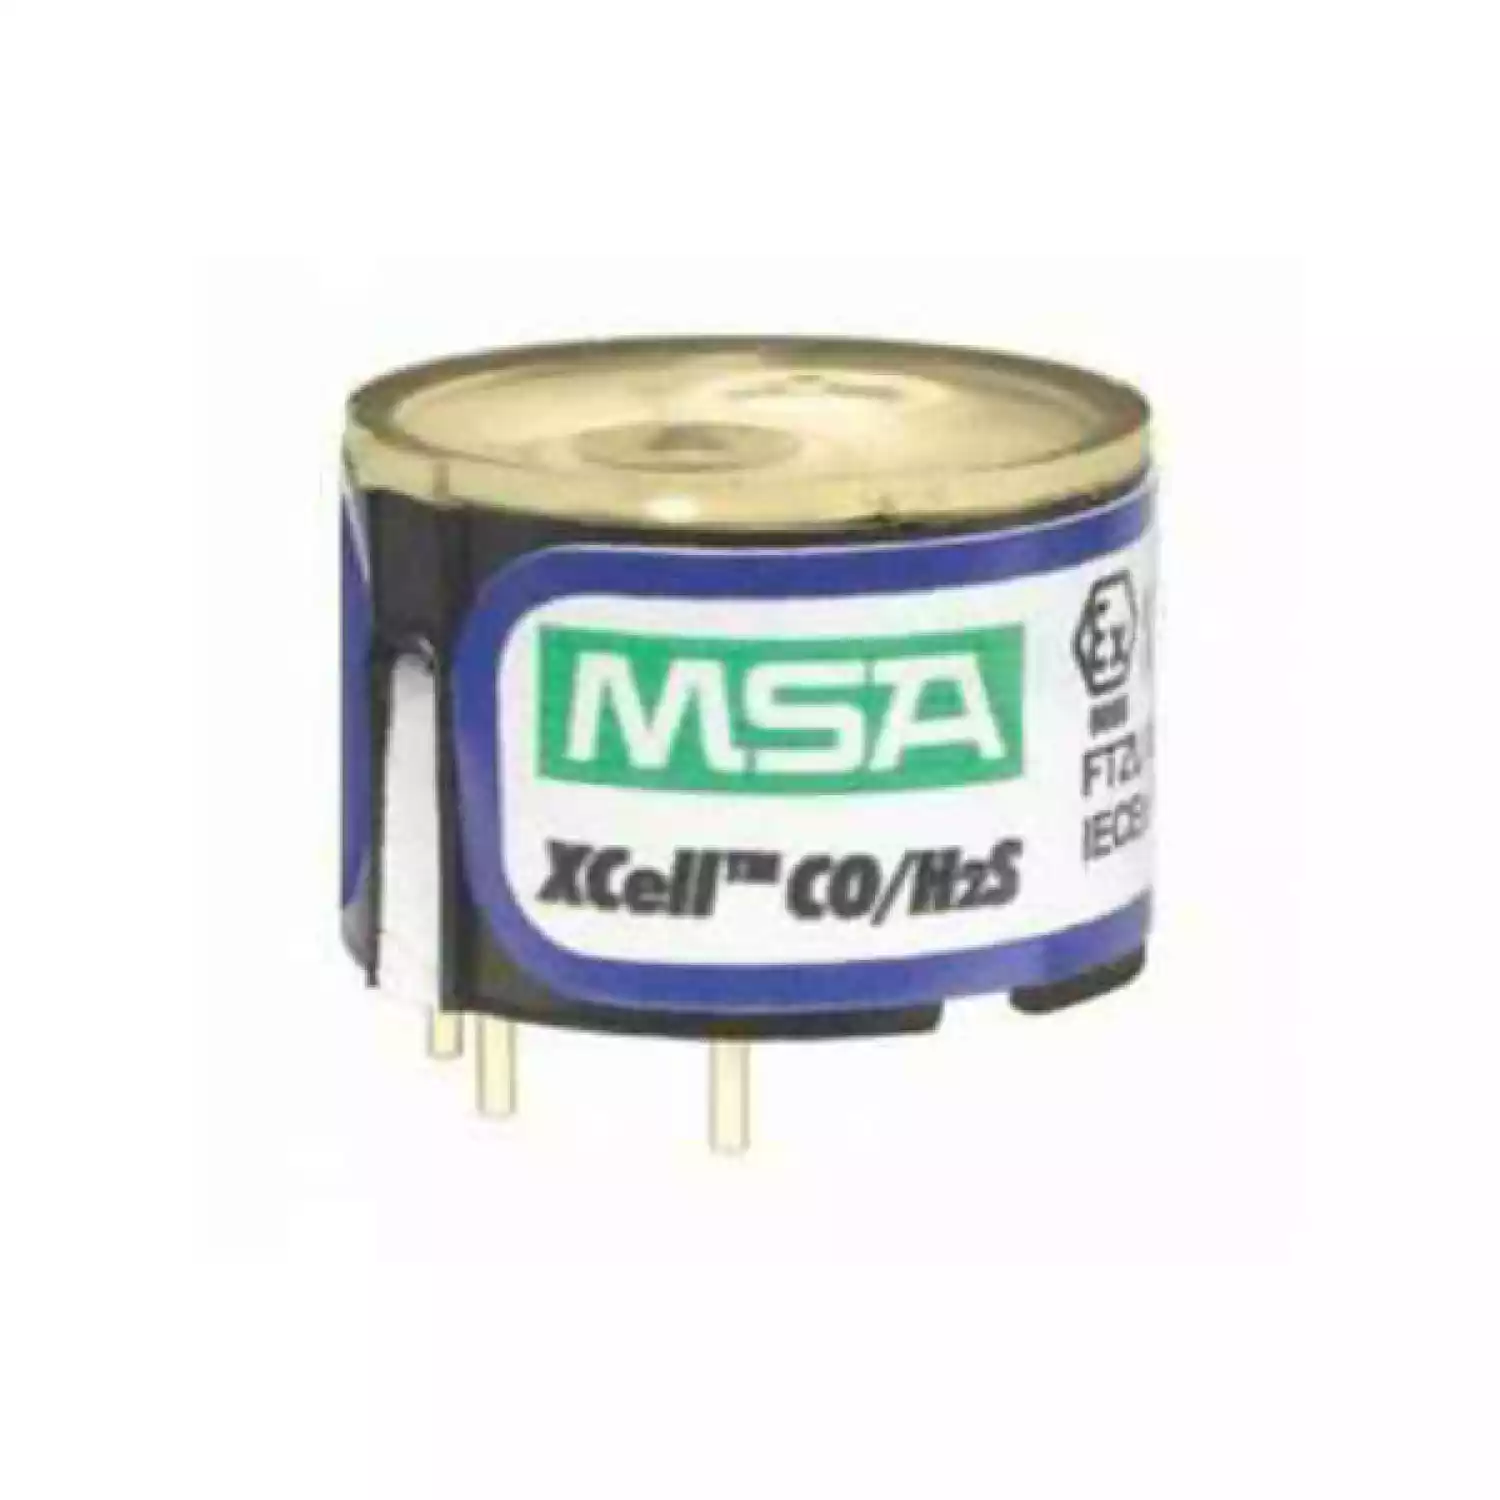 Сенсор MSA XCELL на H2S/CO для газоанализаторов семейства ALTAIR - 1